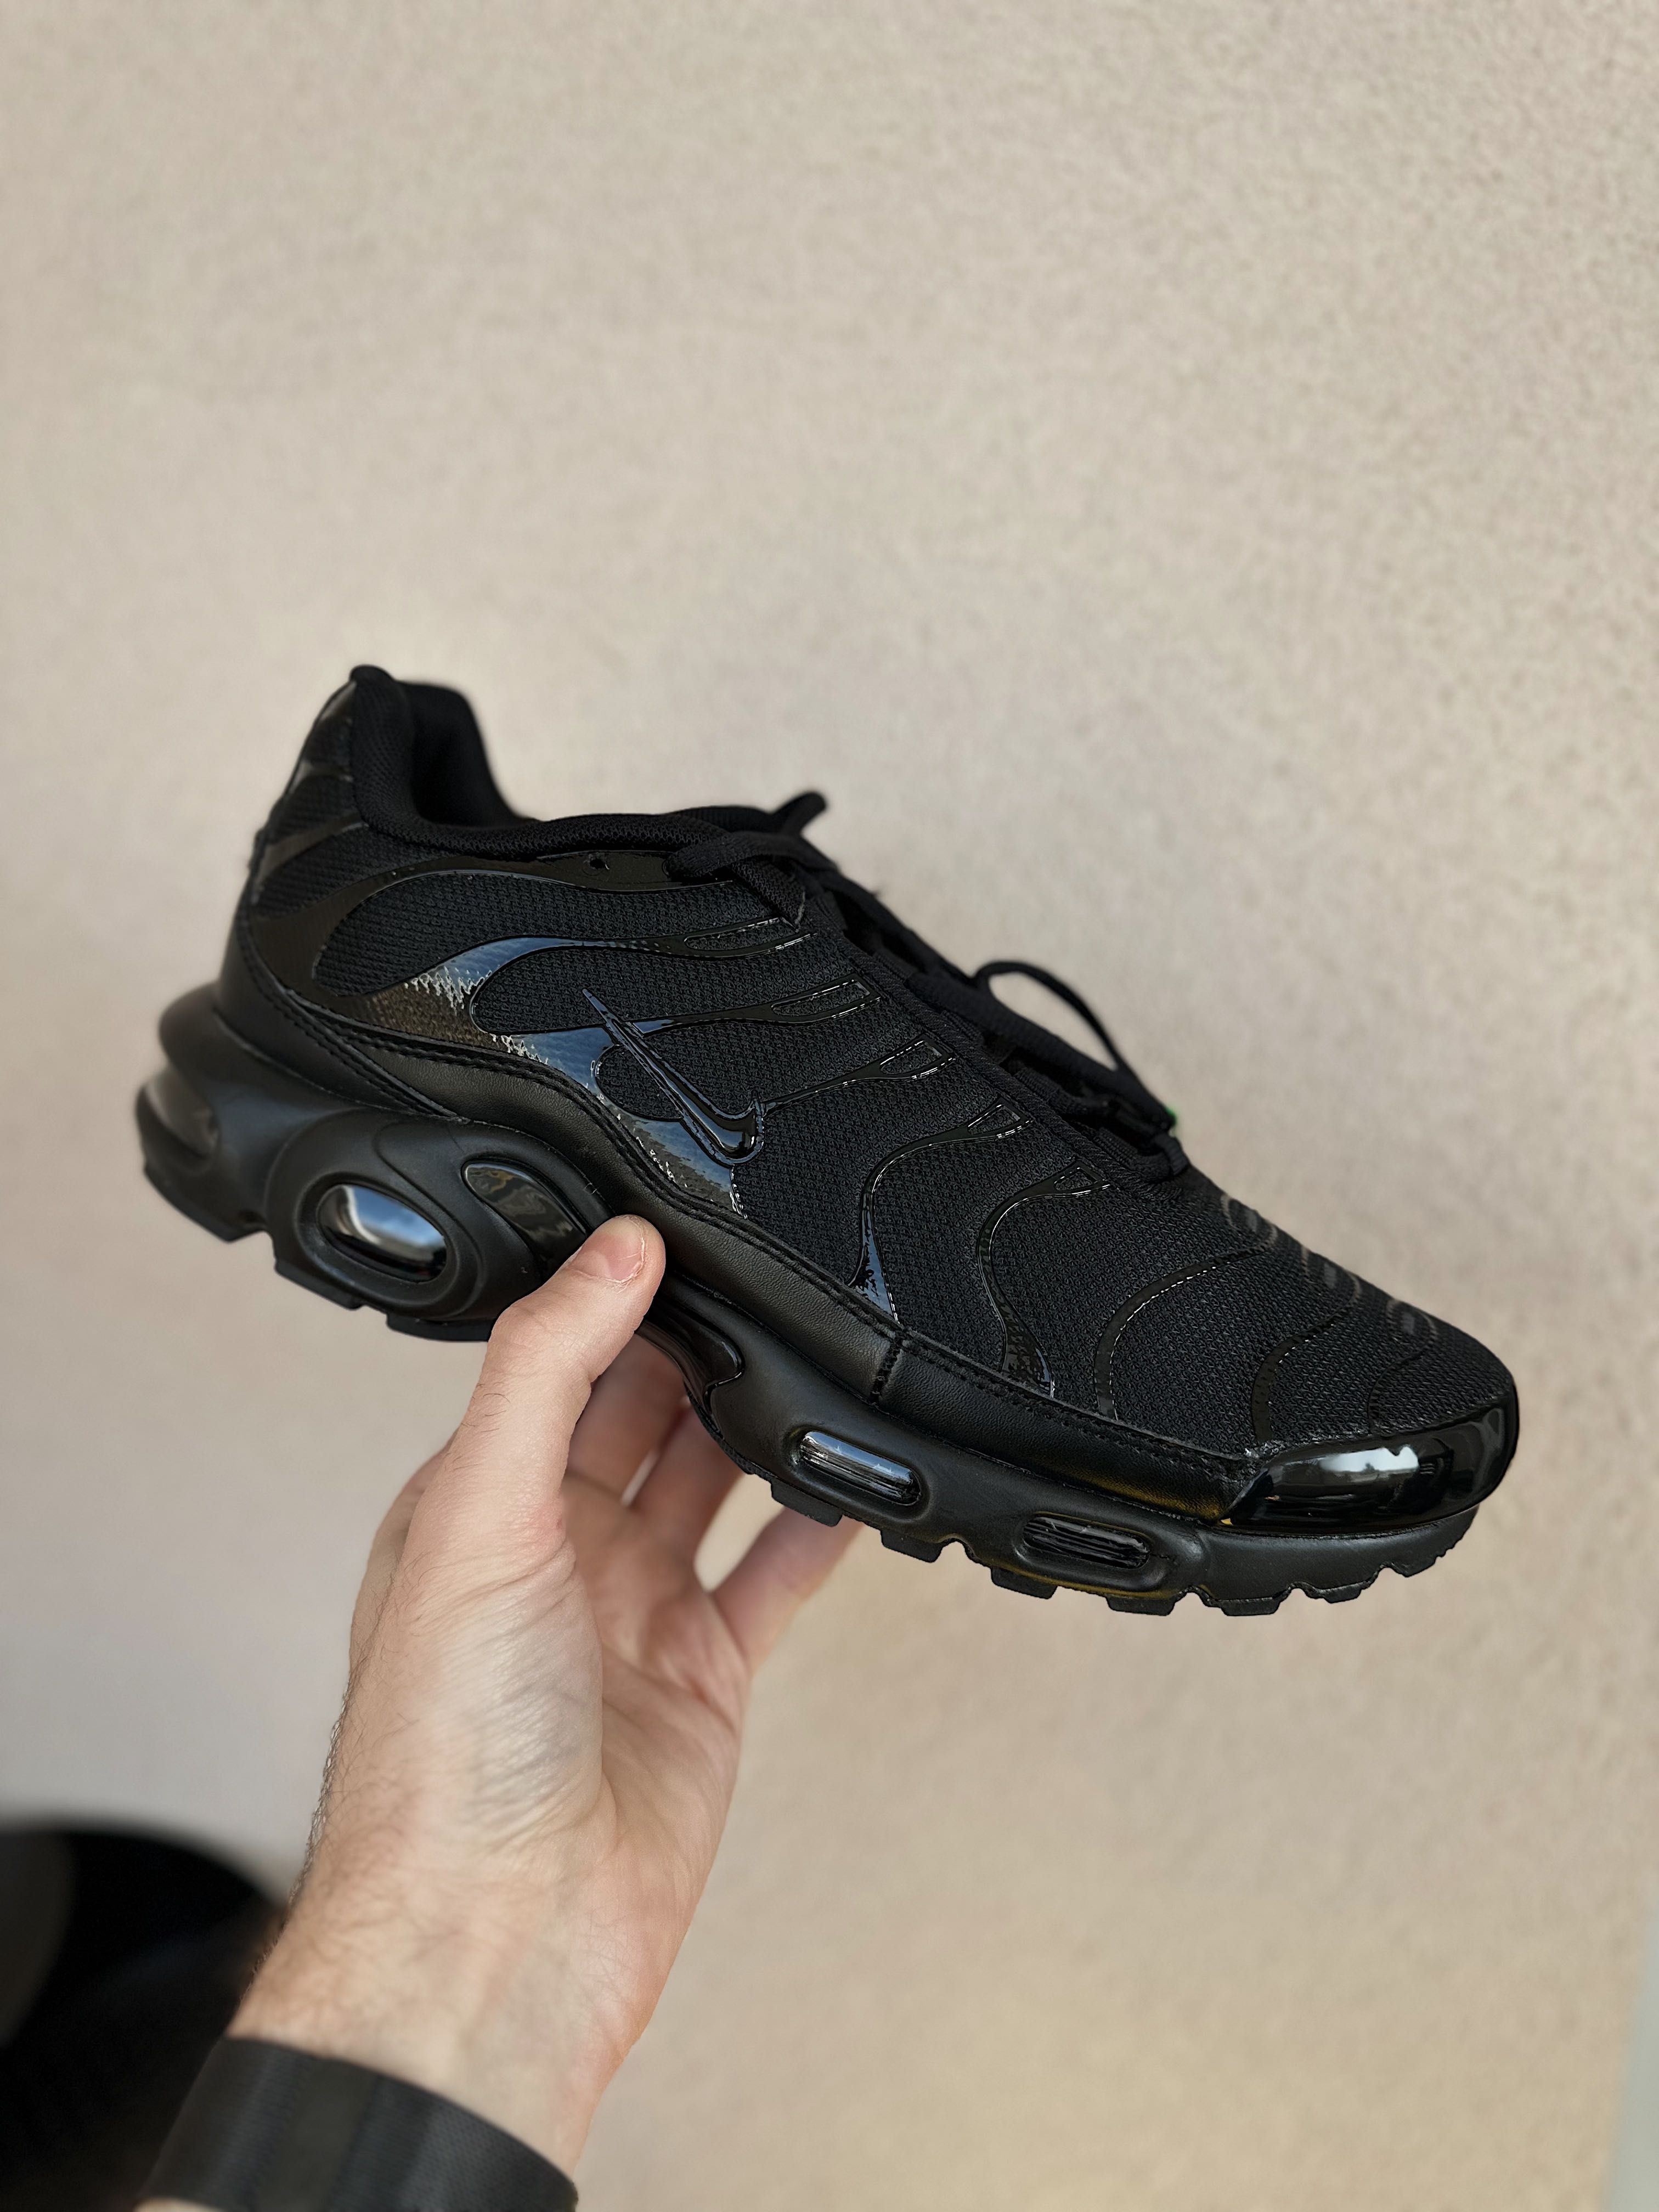 Мужские кроссовки Nike Air Max TN Plus Black . Размеры 40-46